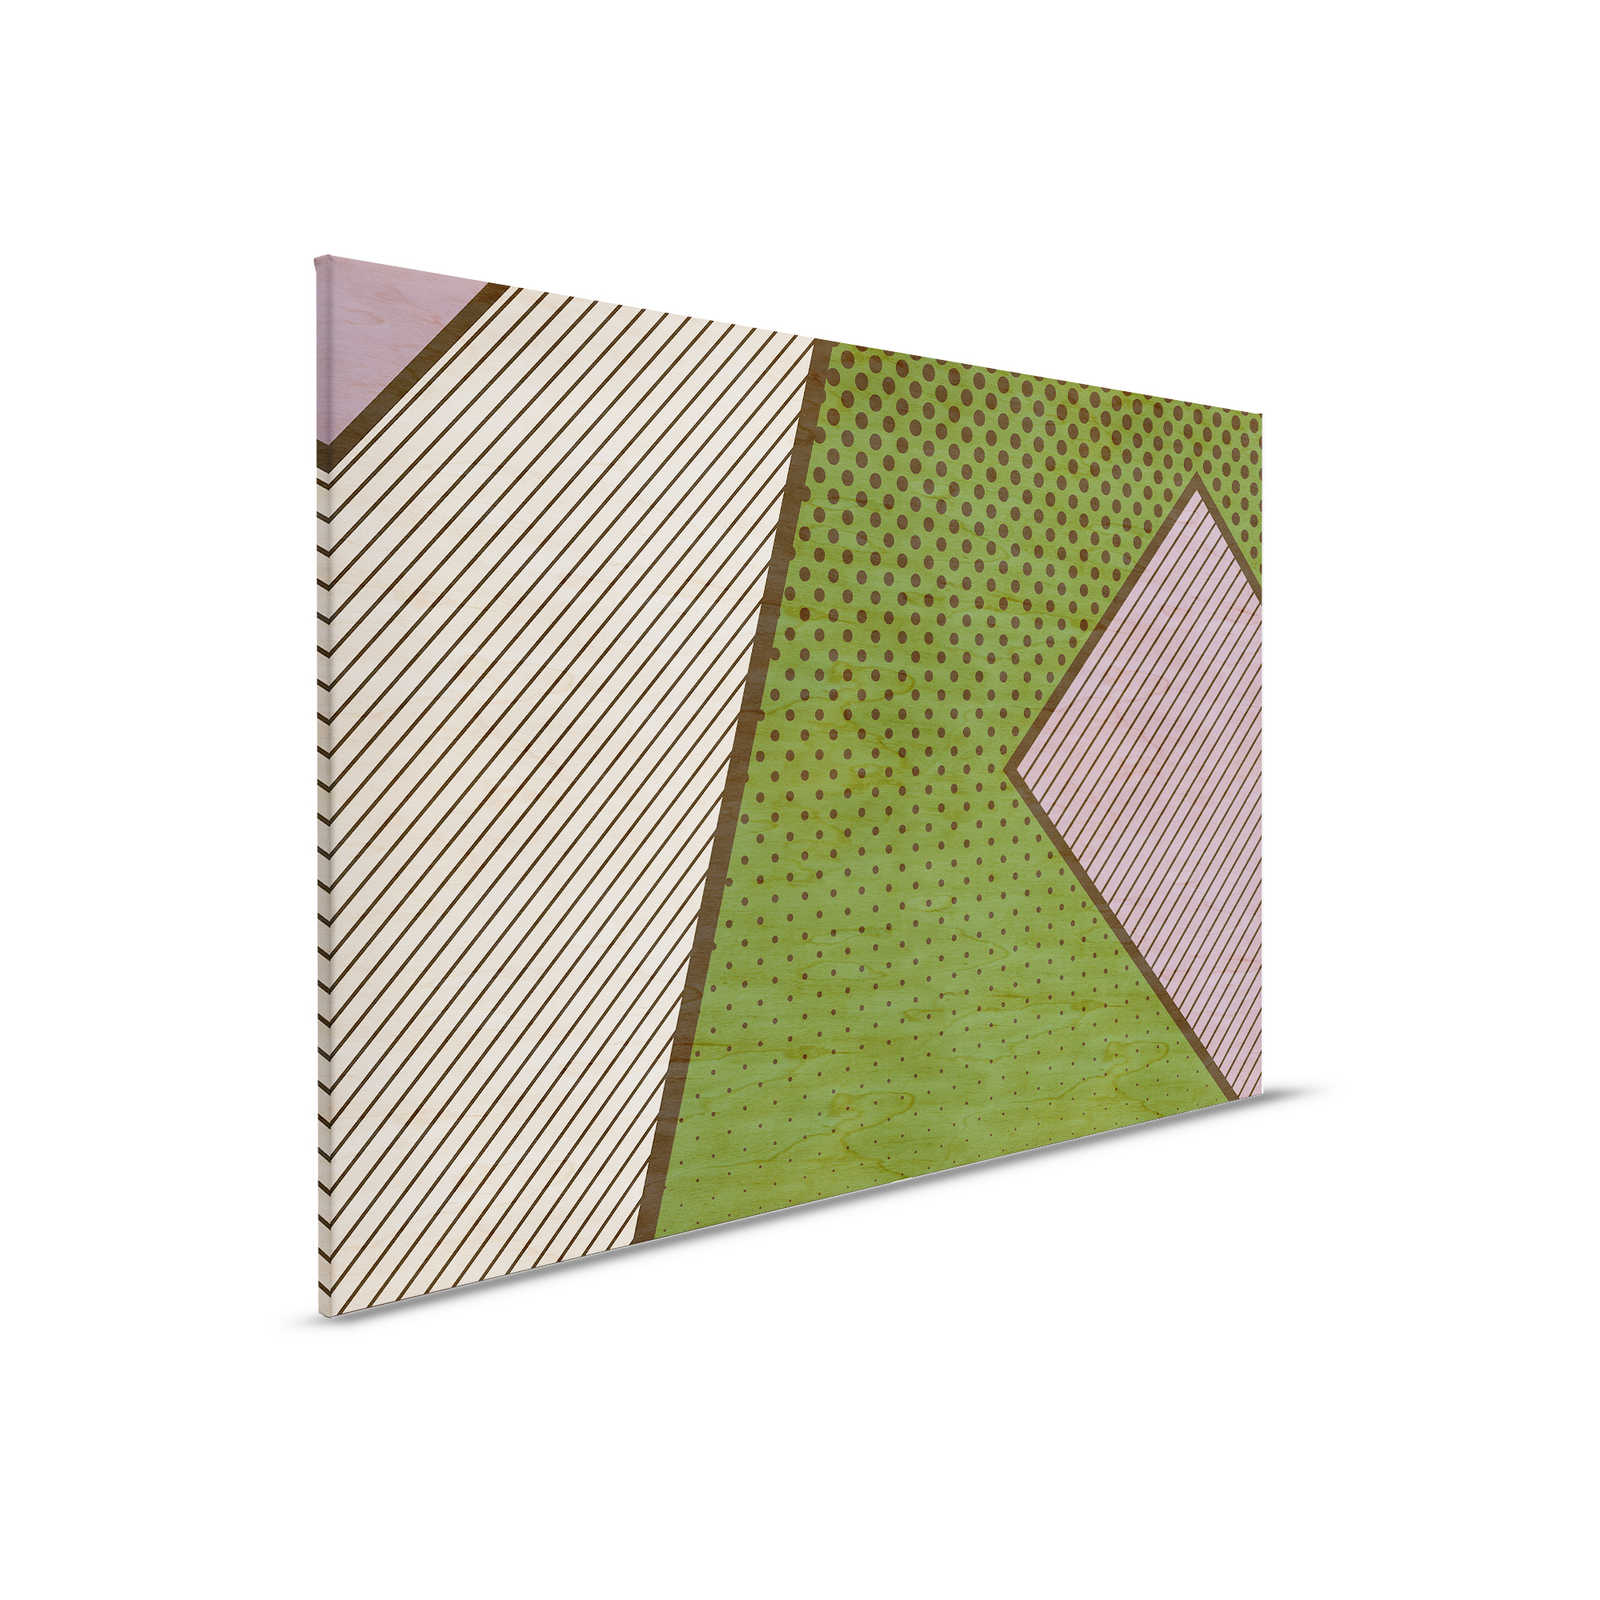         Bird gang 3 - Abstraktes Leinwandbild in Sperrholz Struktur mit bunte Farbflächen – 0,90 m x 0,60 m
    